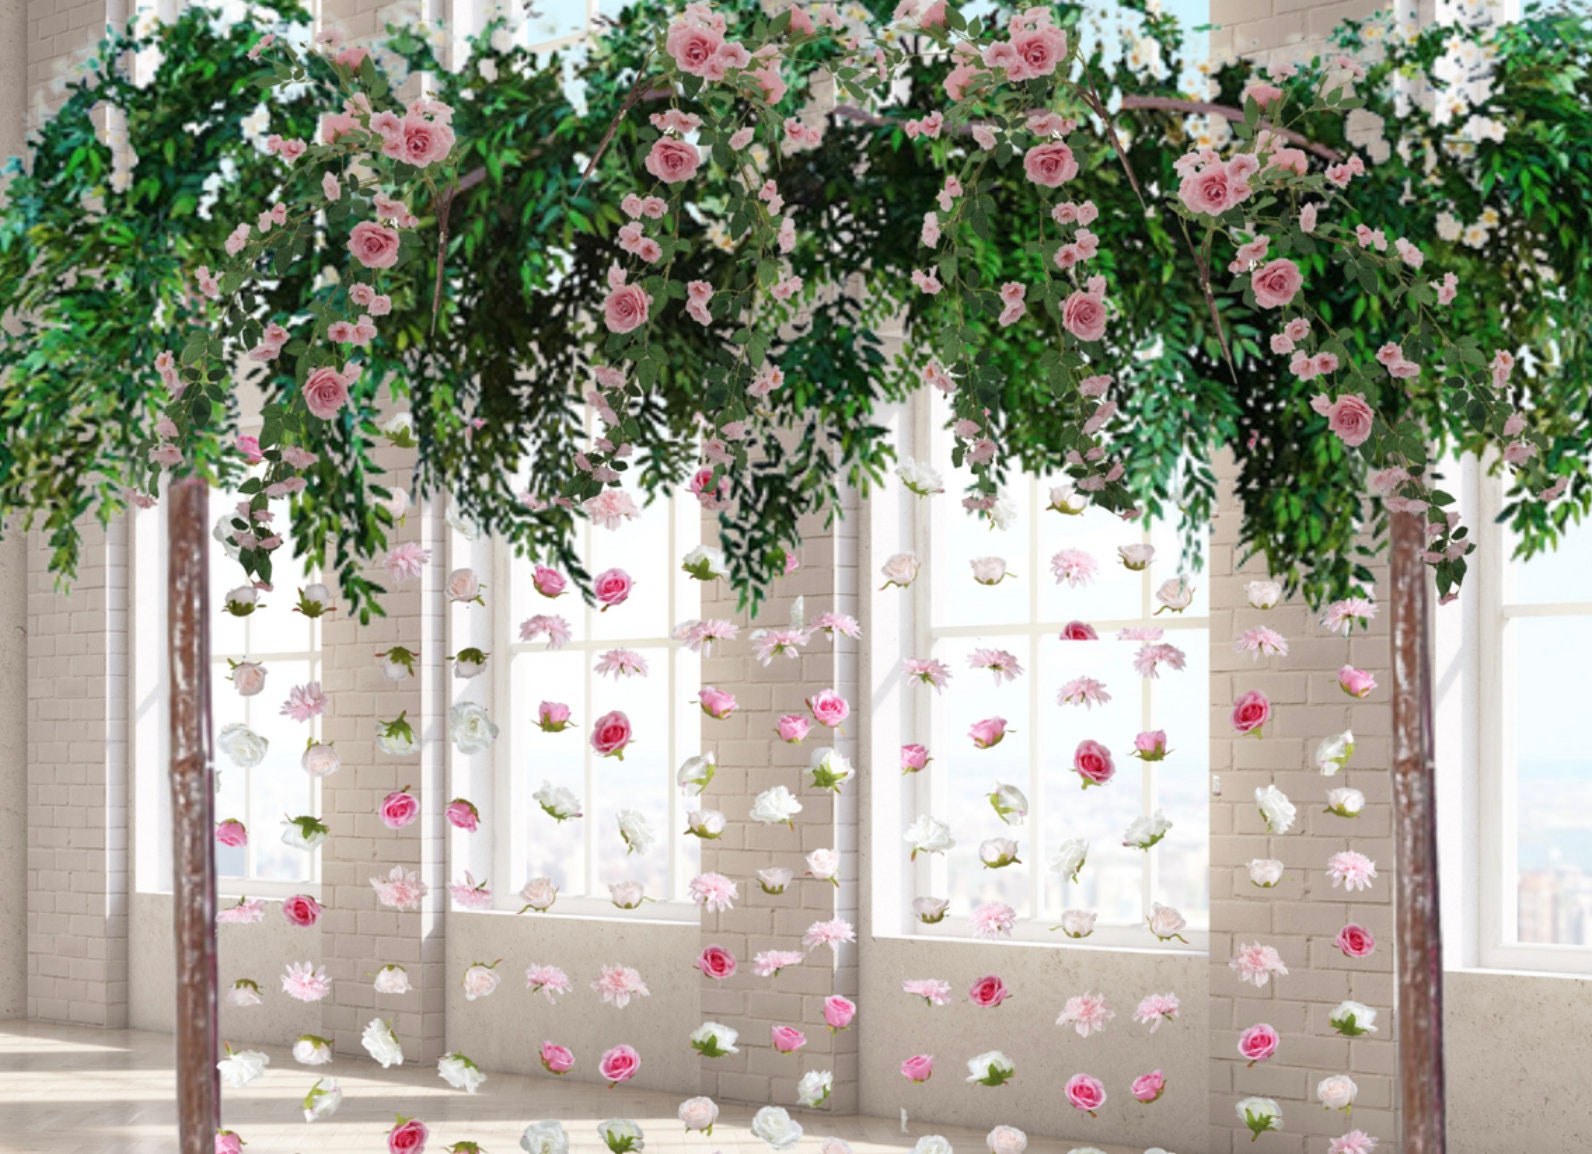 FIVE 6.5 FT. Hanging Flower Garland Vine Suspended Floral Arrangements Wedding Ceremony Outdoor Flowers Pink White Ivory Ceremony Arch Decor